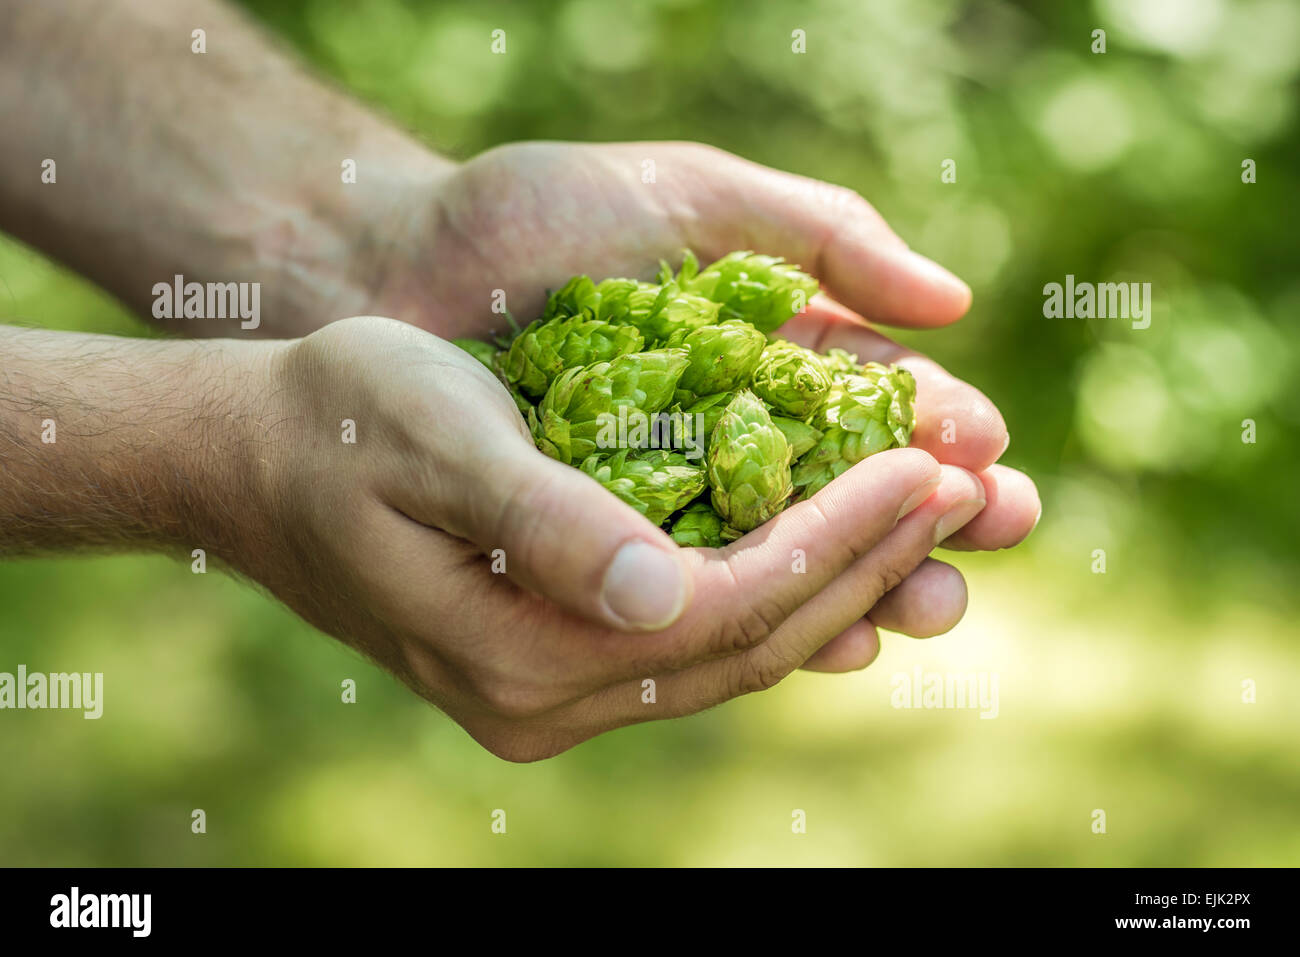 Hop umbels (Humulus lupulus) in hands Stock Photo